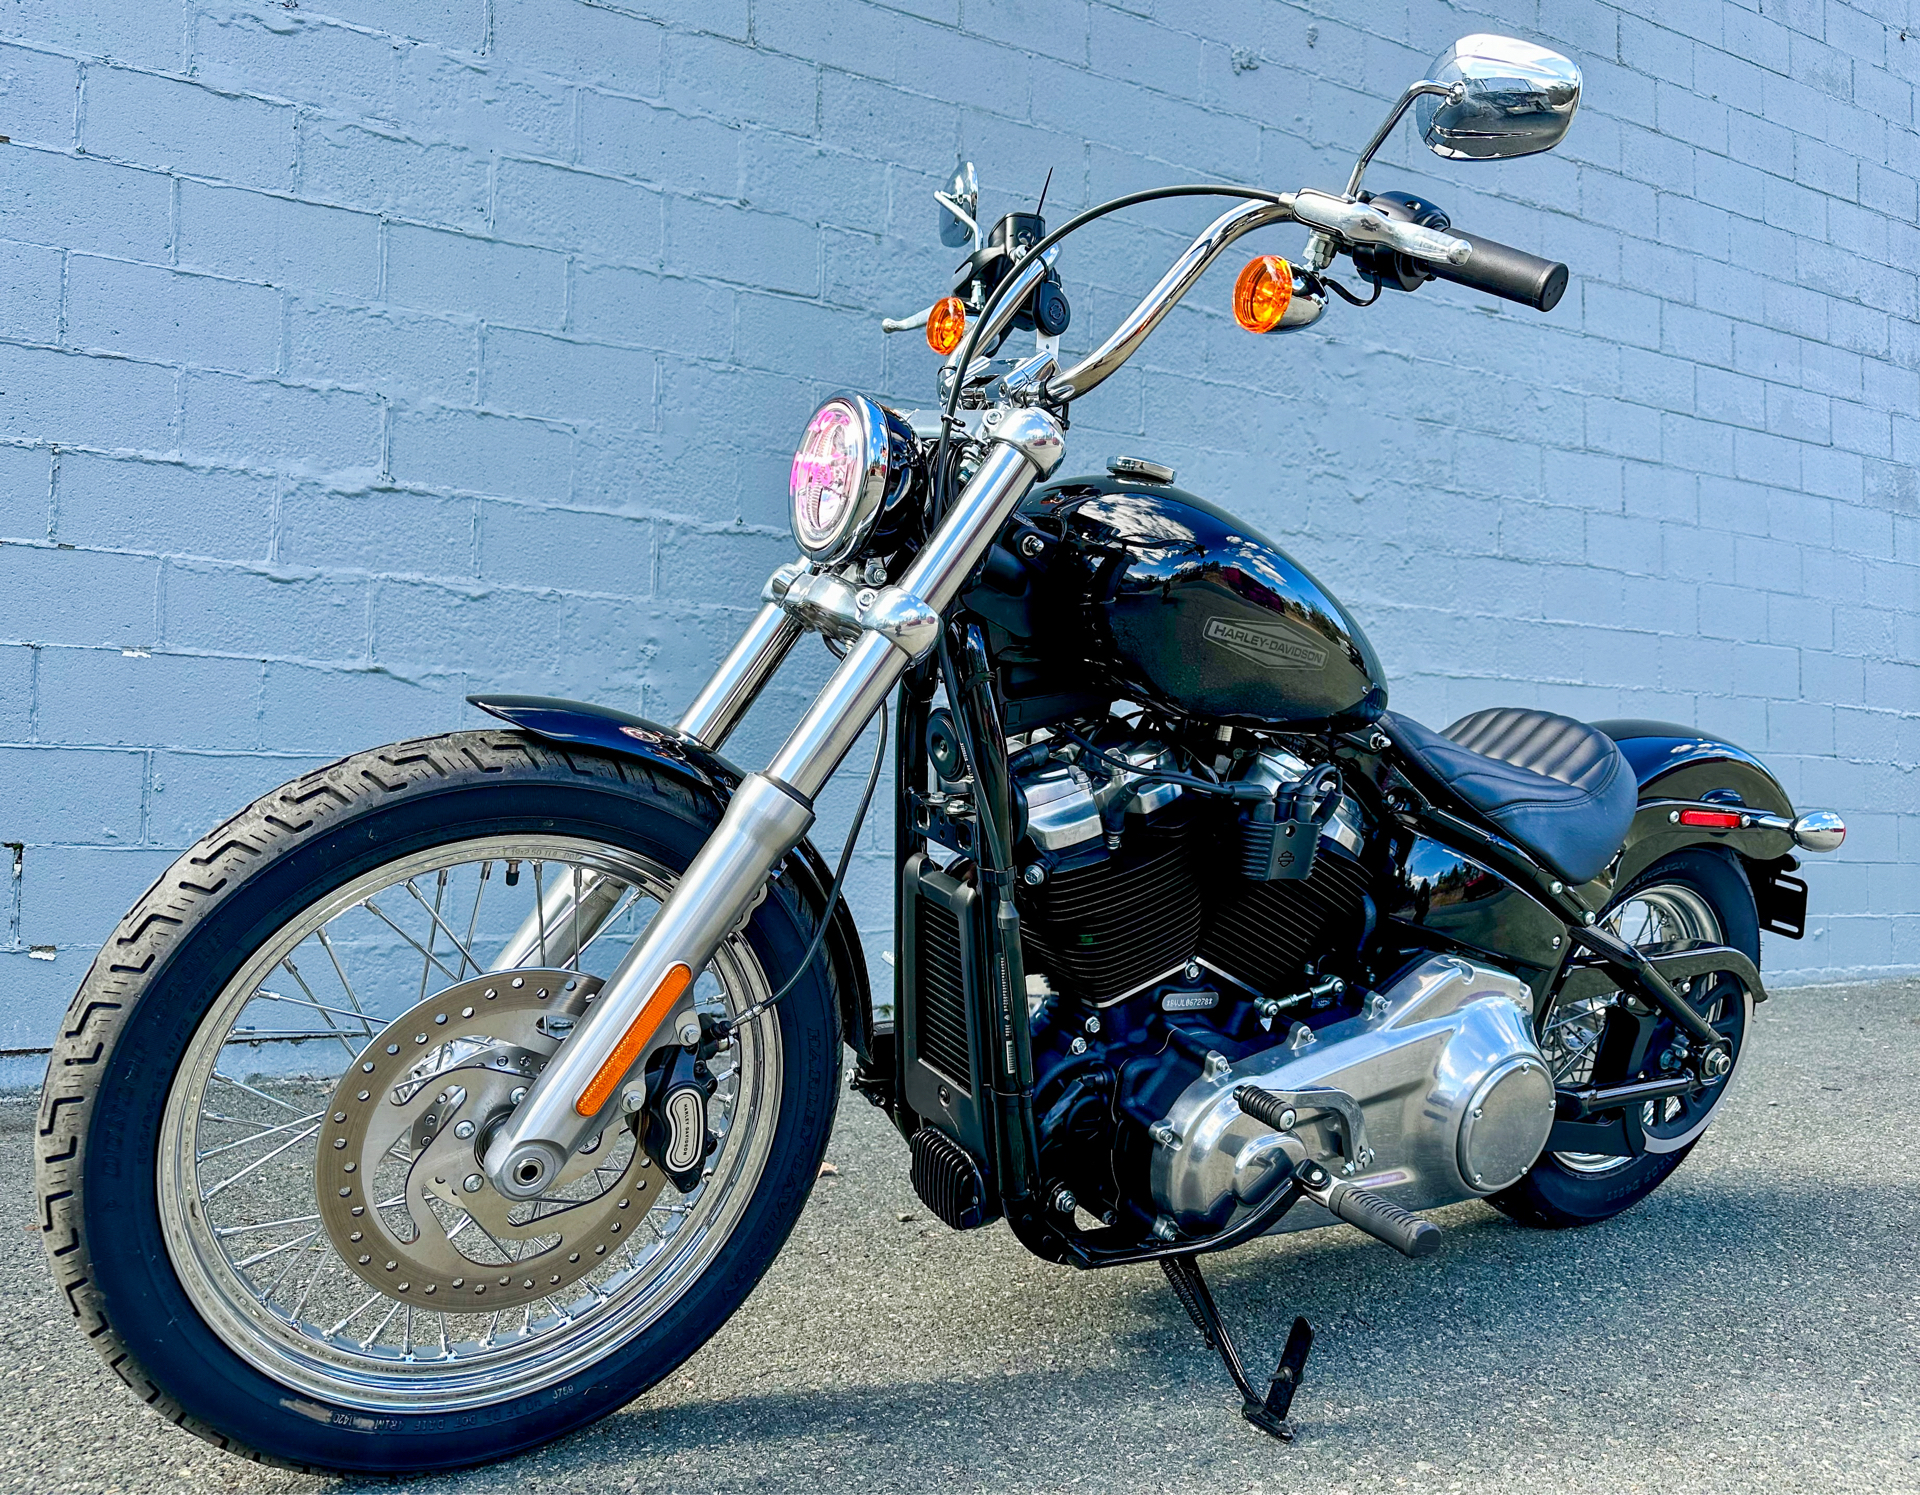 2020 Harley-Davidson Softail® Standard in Foxboro, Massachusetts - Photo 12